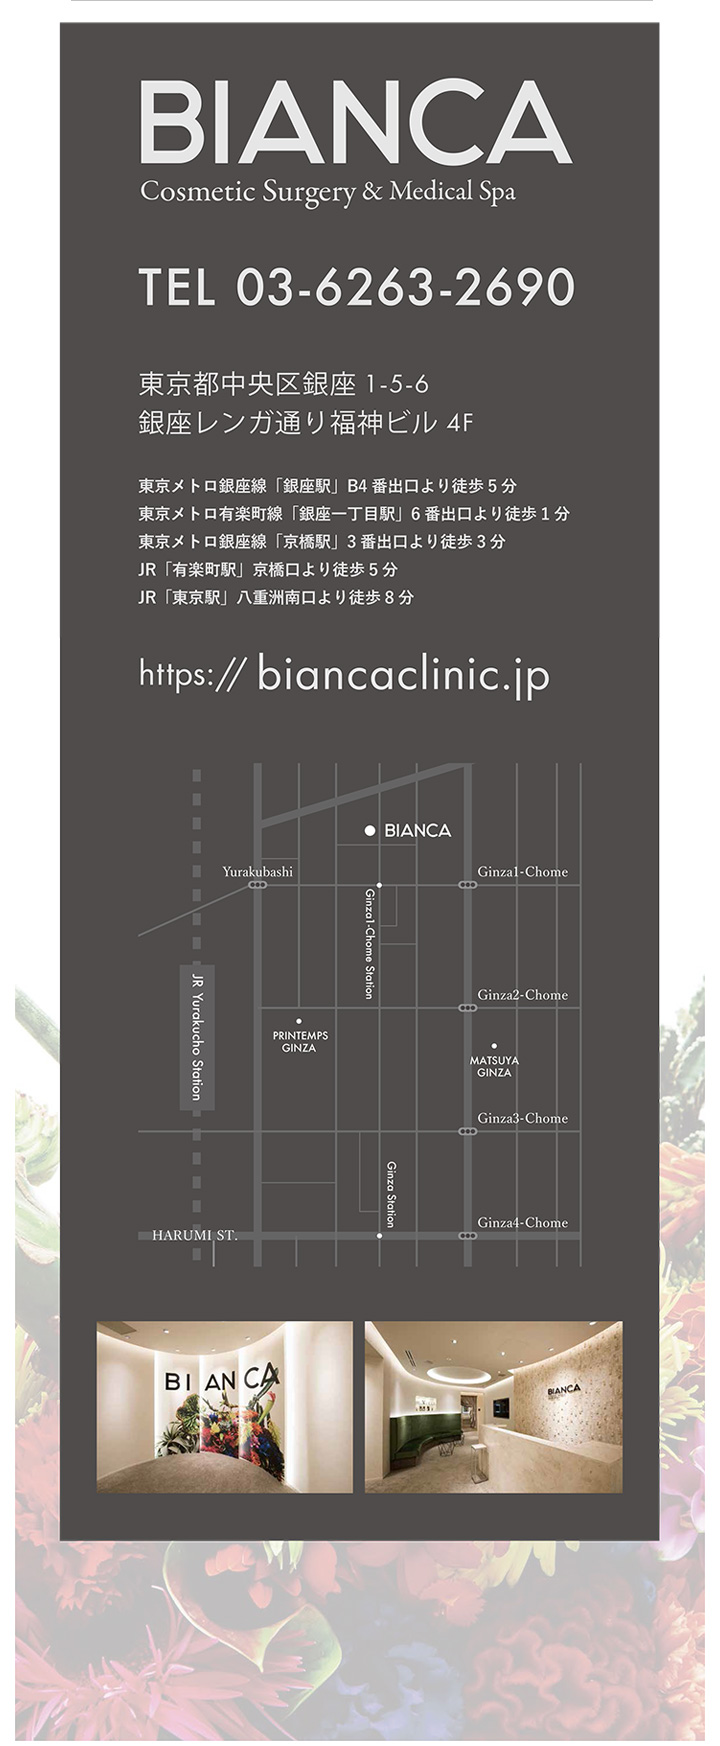 BIANCA Cosmetic Surgery & Medical Spa TEL:03-6263-2690